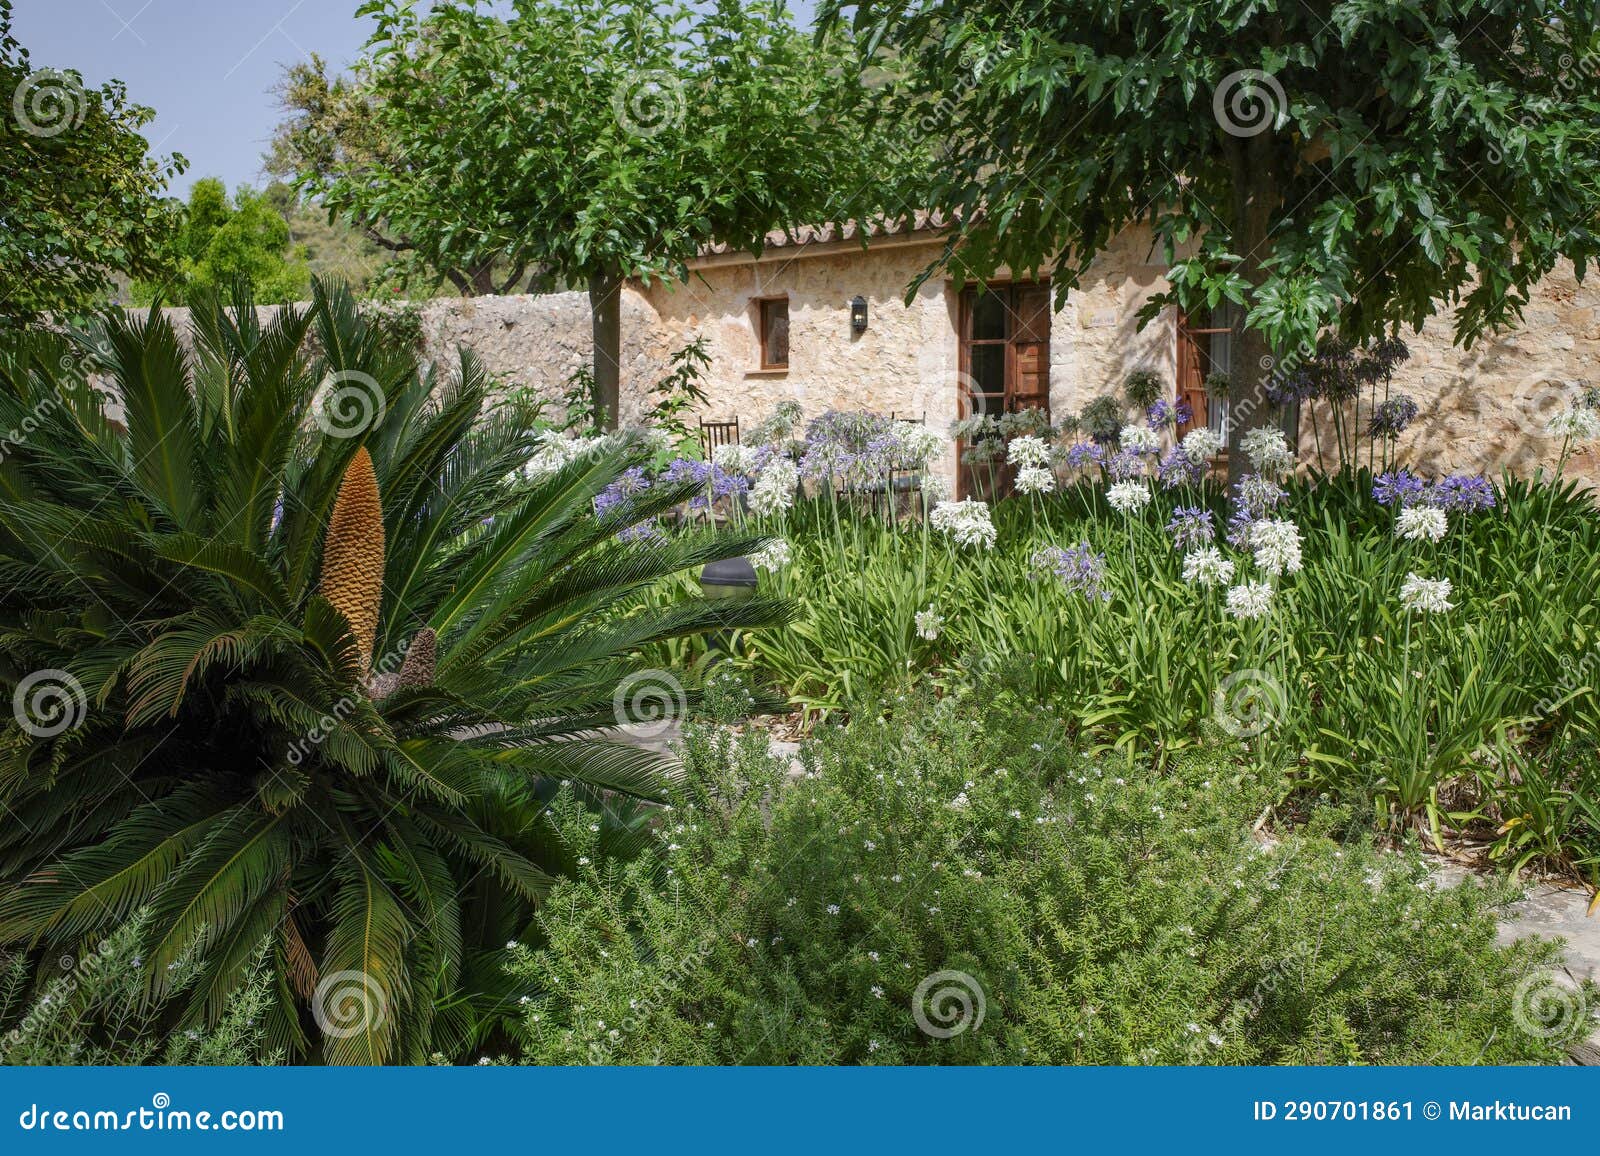 mallorca, spain - 10 july, 2023: lush tropical gardens at an agroturismo hotel in mallorca, spain